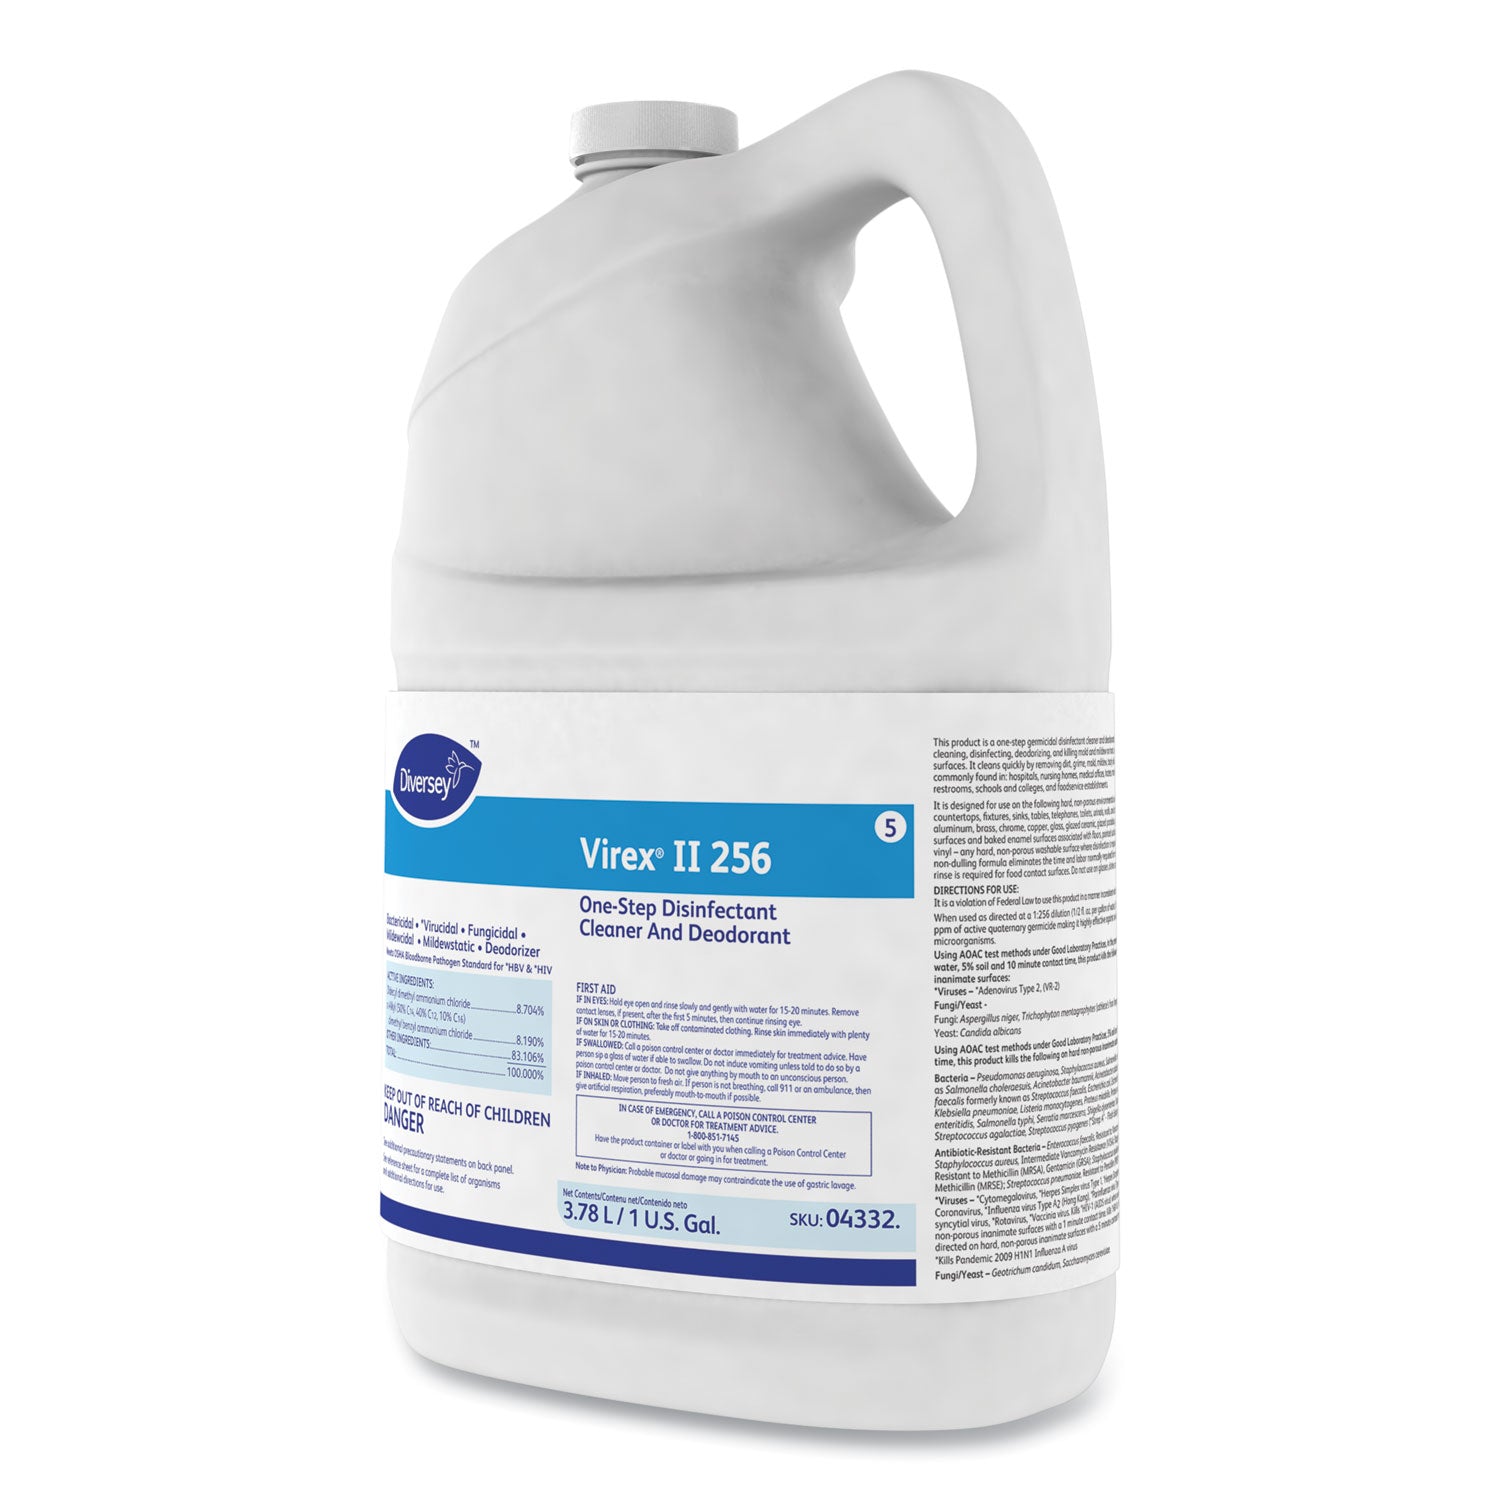 virex-ii-256-one-step-disinfectant-cleaner-deodorant-mint-1-gal-4-bottles-ct_dvo04332 - 3